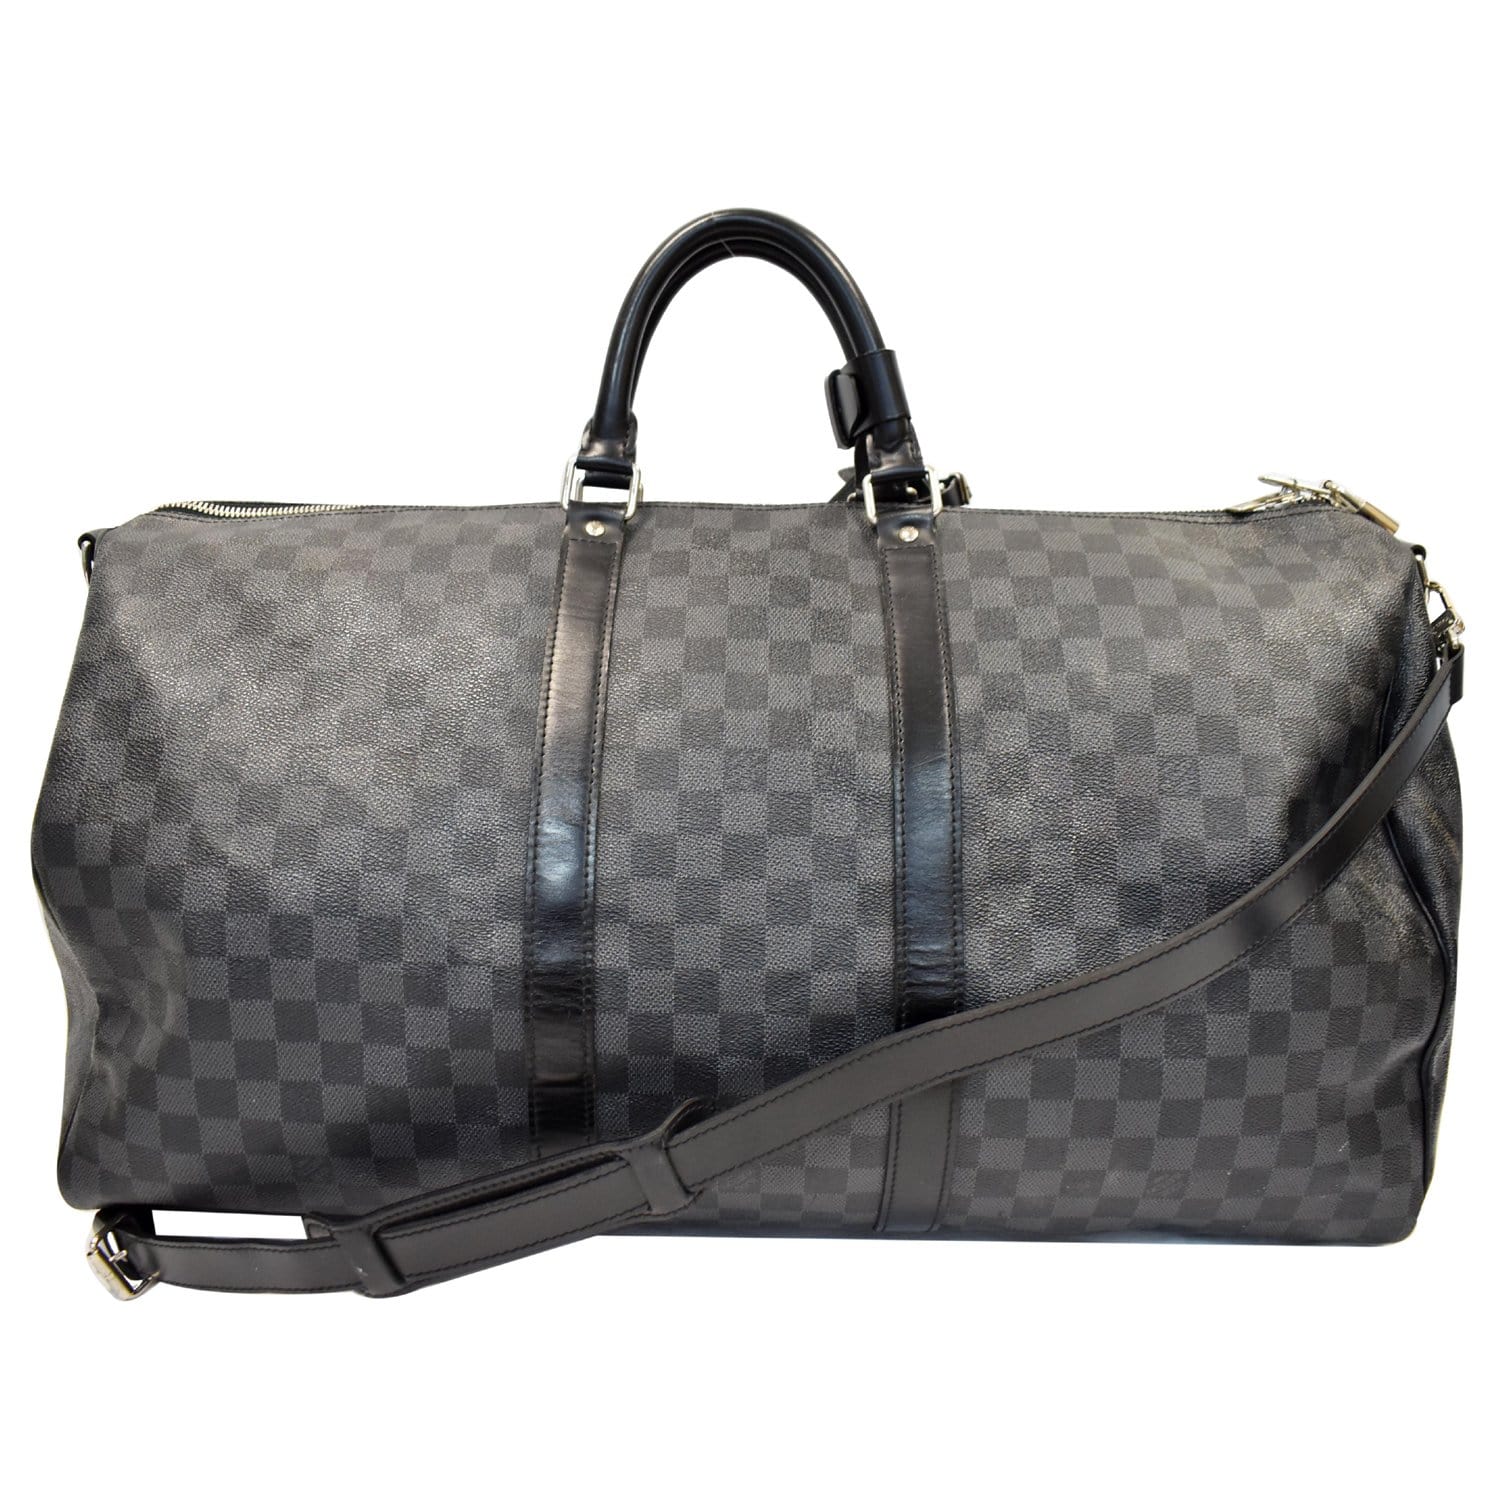 Louis Vuitton keepall travel bag black monogram (unisex)